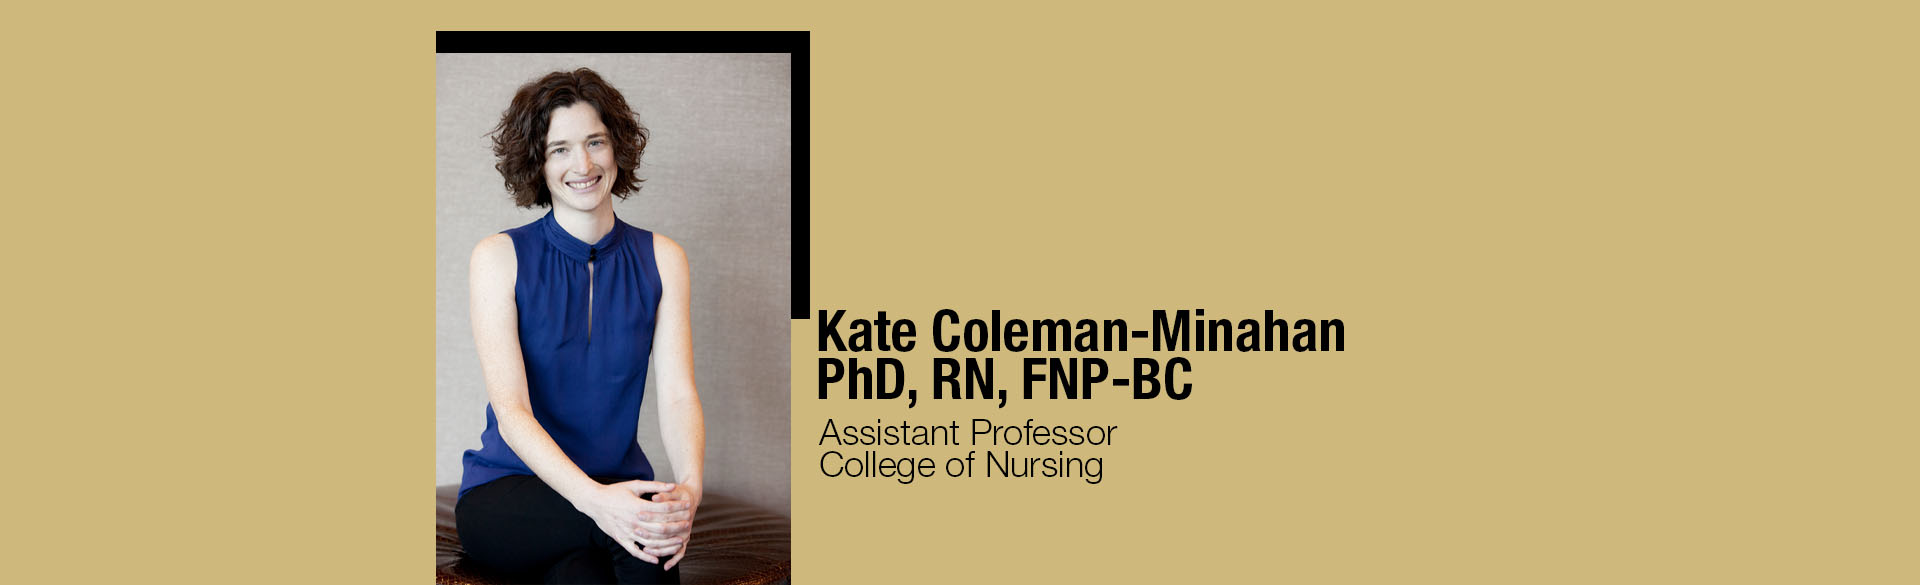 Kate Coleman-Minahan, PhD, RN, FNP-BC Assistant Professor College of Nursing